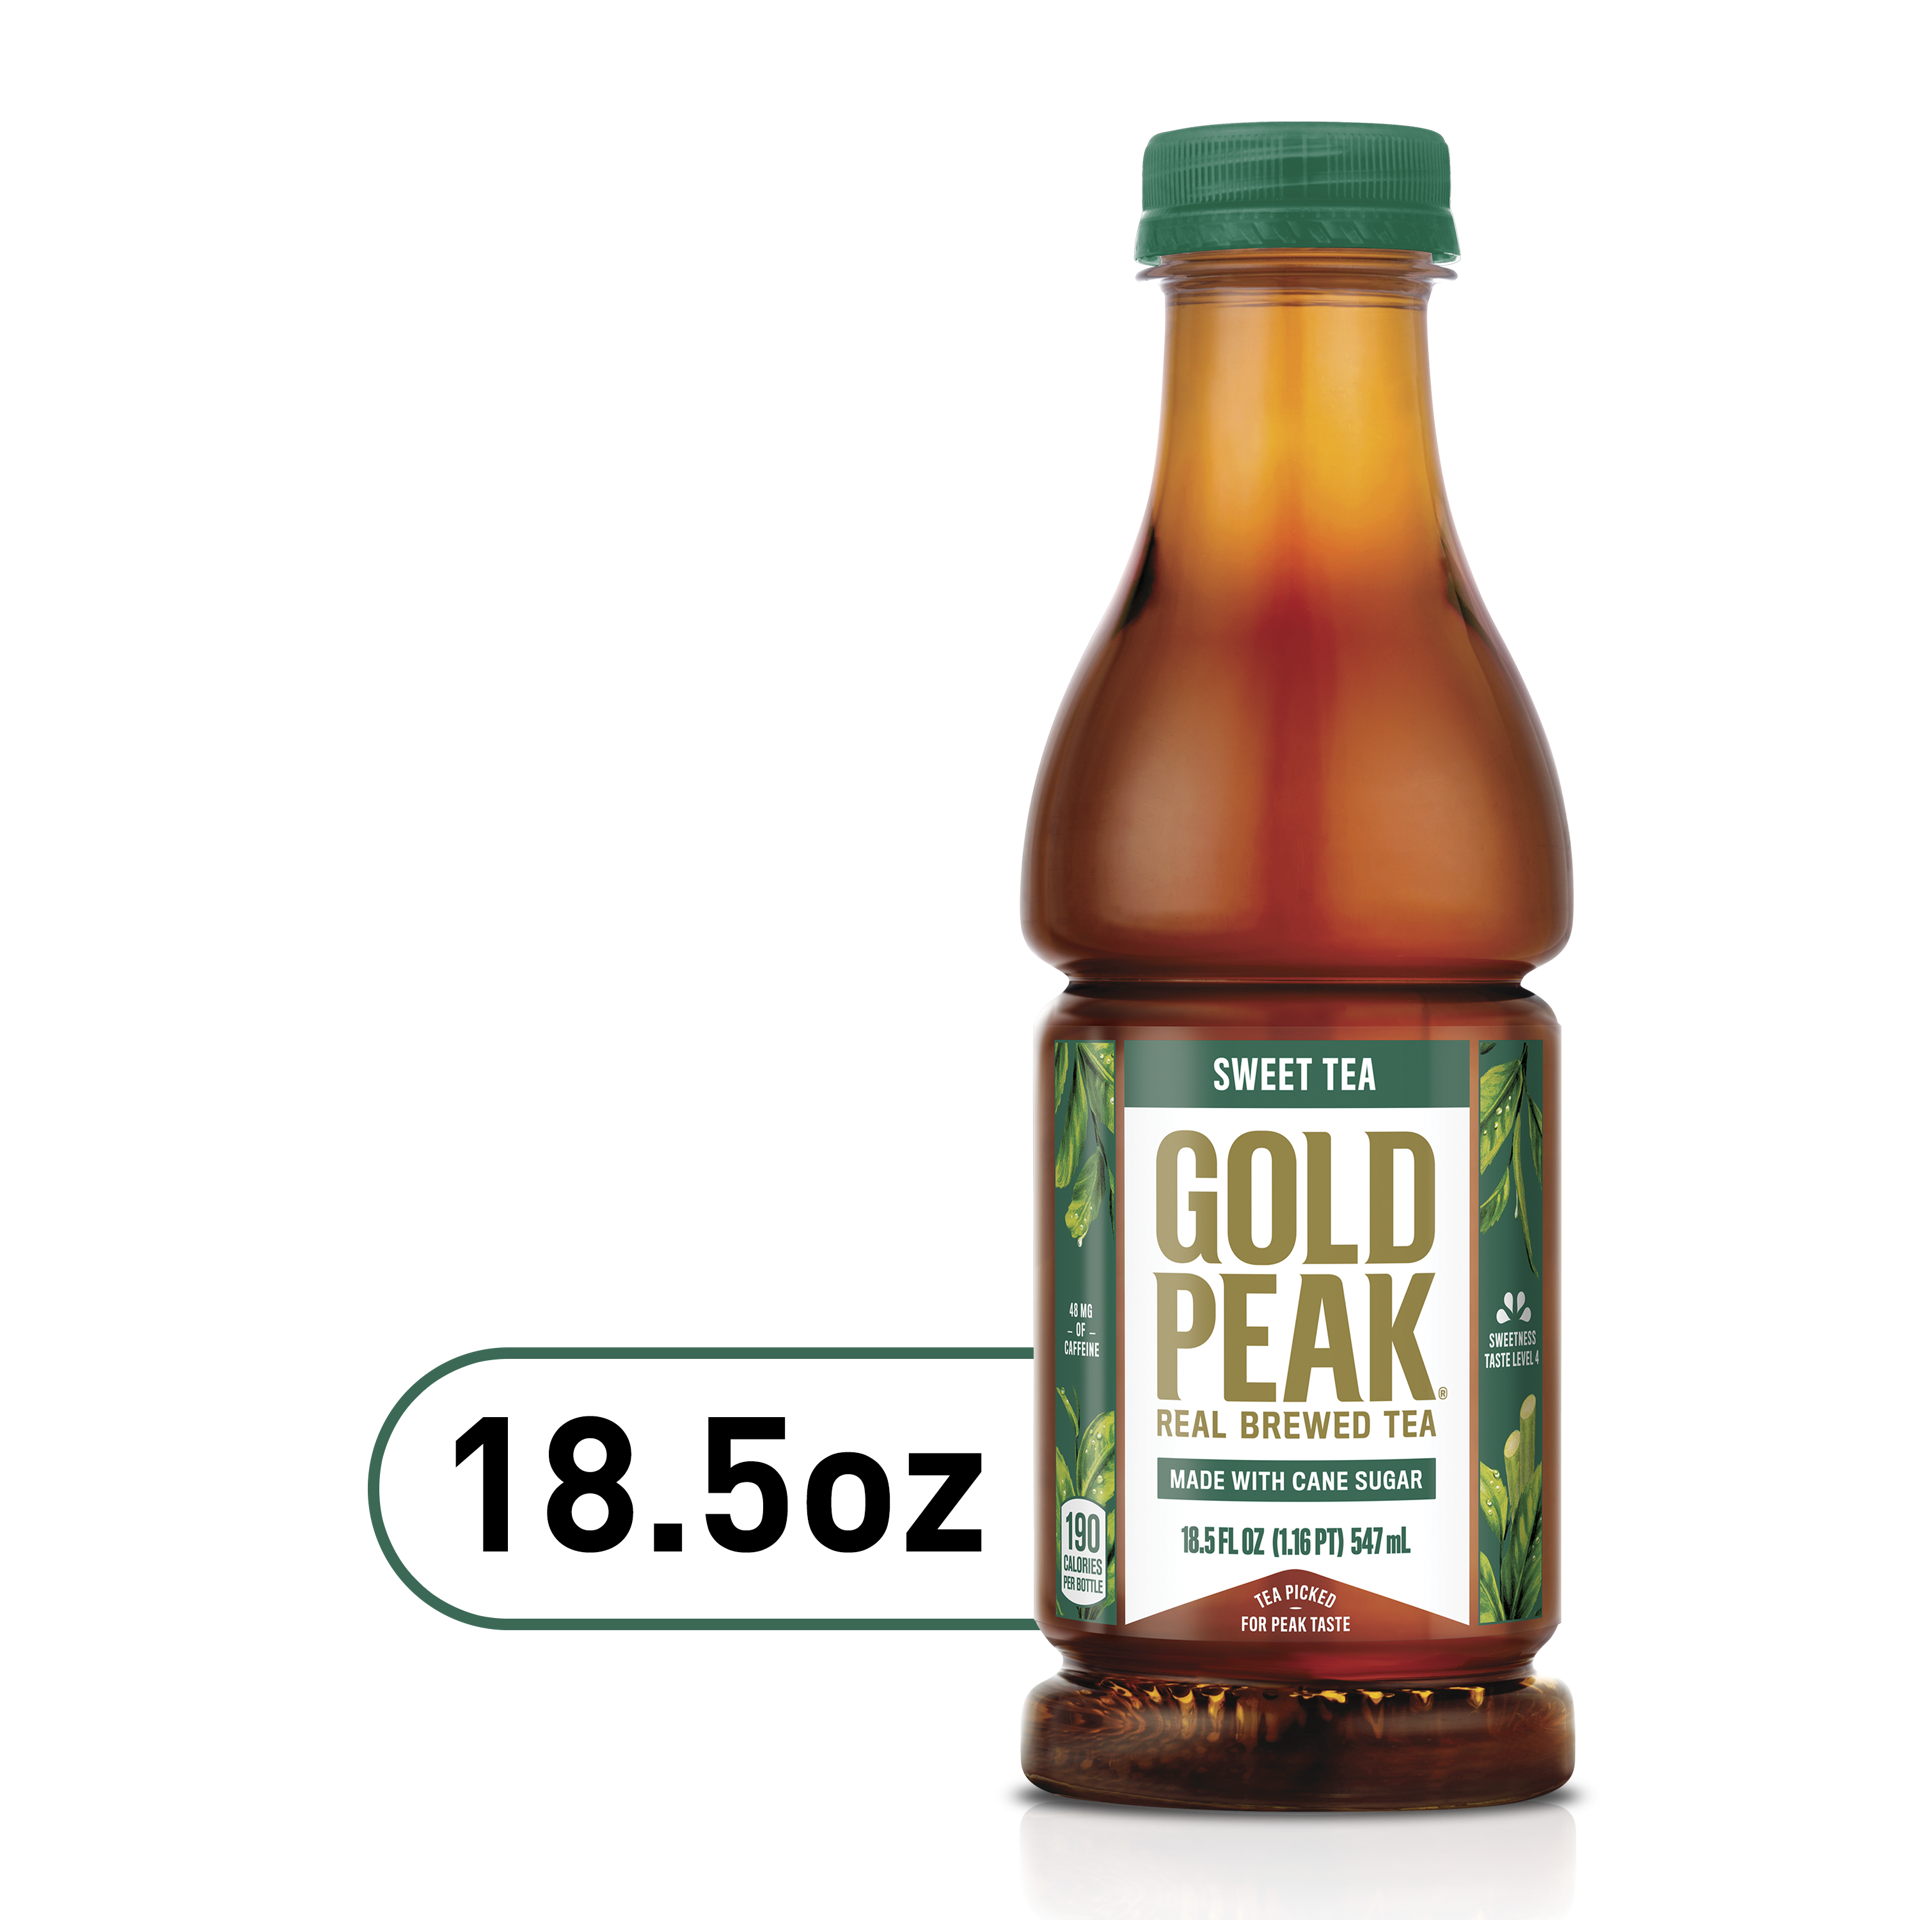 slide 1 of 21, Gold Peak Sweetened Black Iced Tea Drink, 18.5 fl oz, 18.50 fl oz